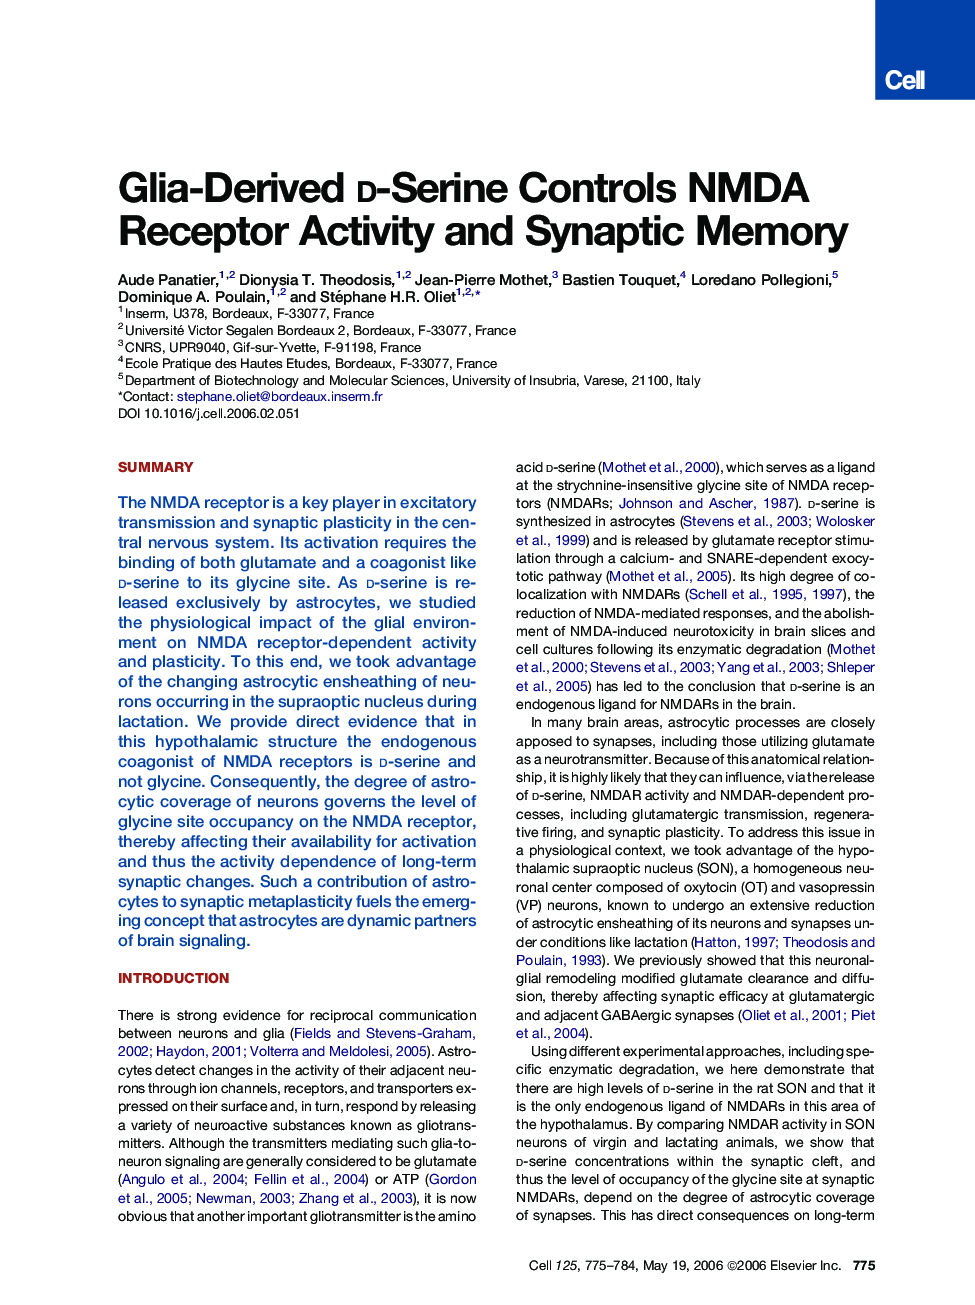 Glia-Derived d-Serine Controls NMDA Receptor Activity and Synaptic Memory